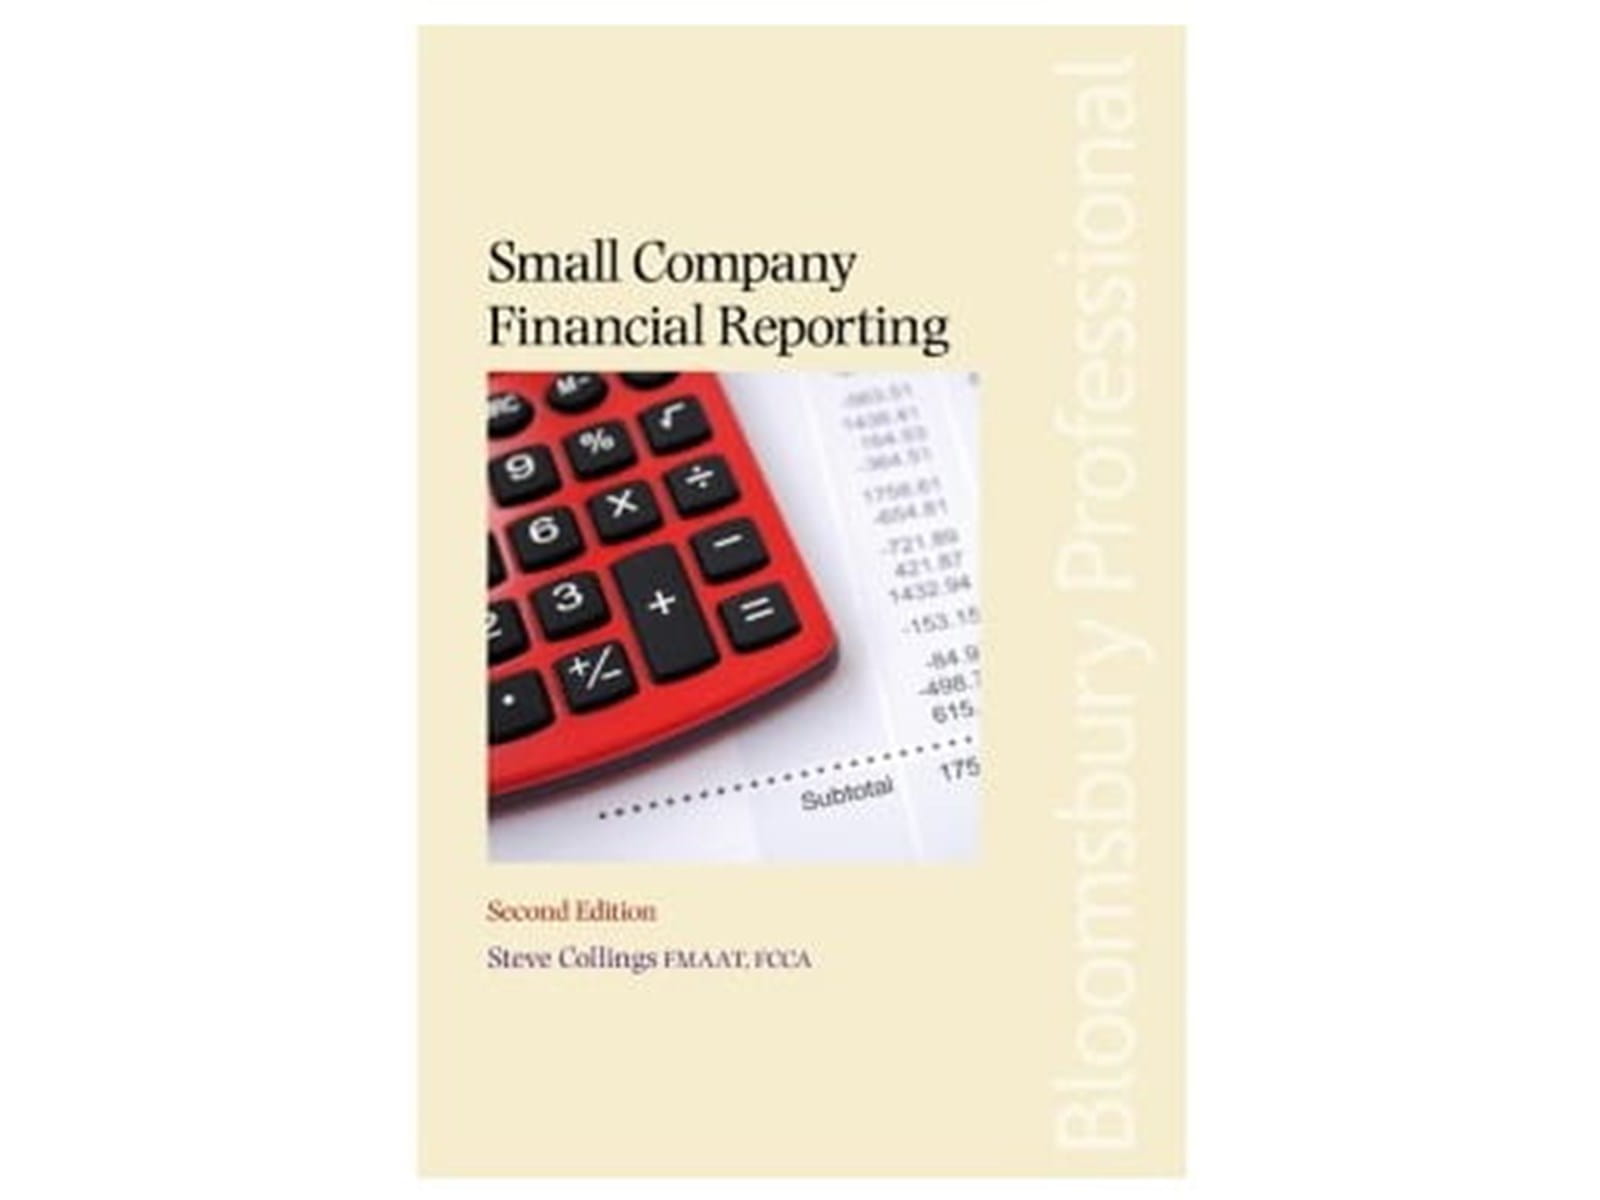  Small Company Financial Reporting book cover